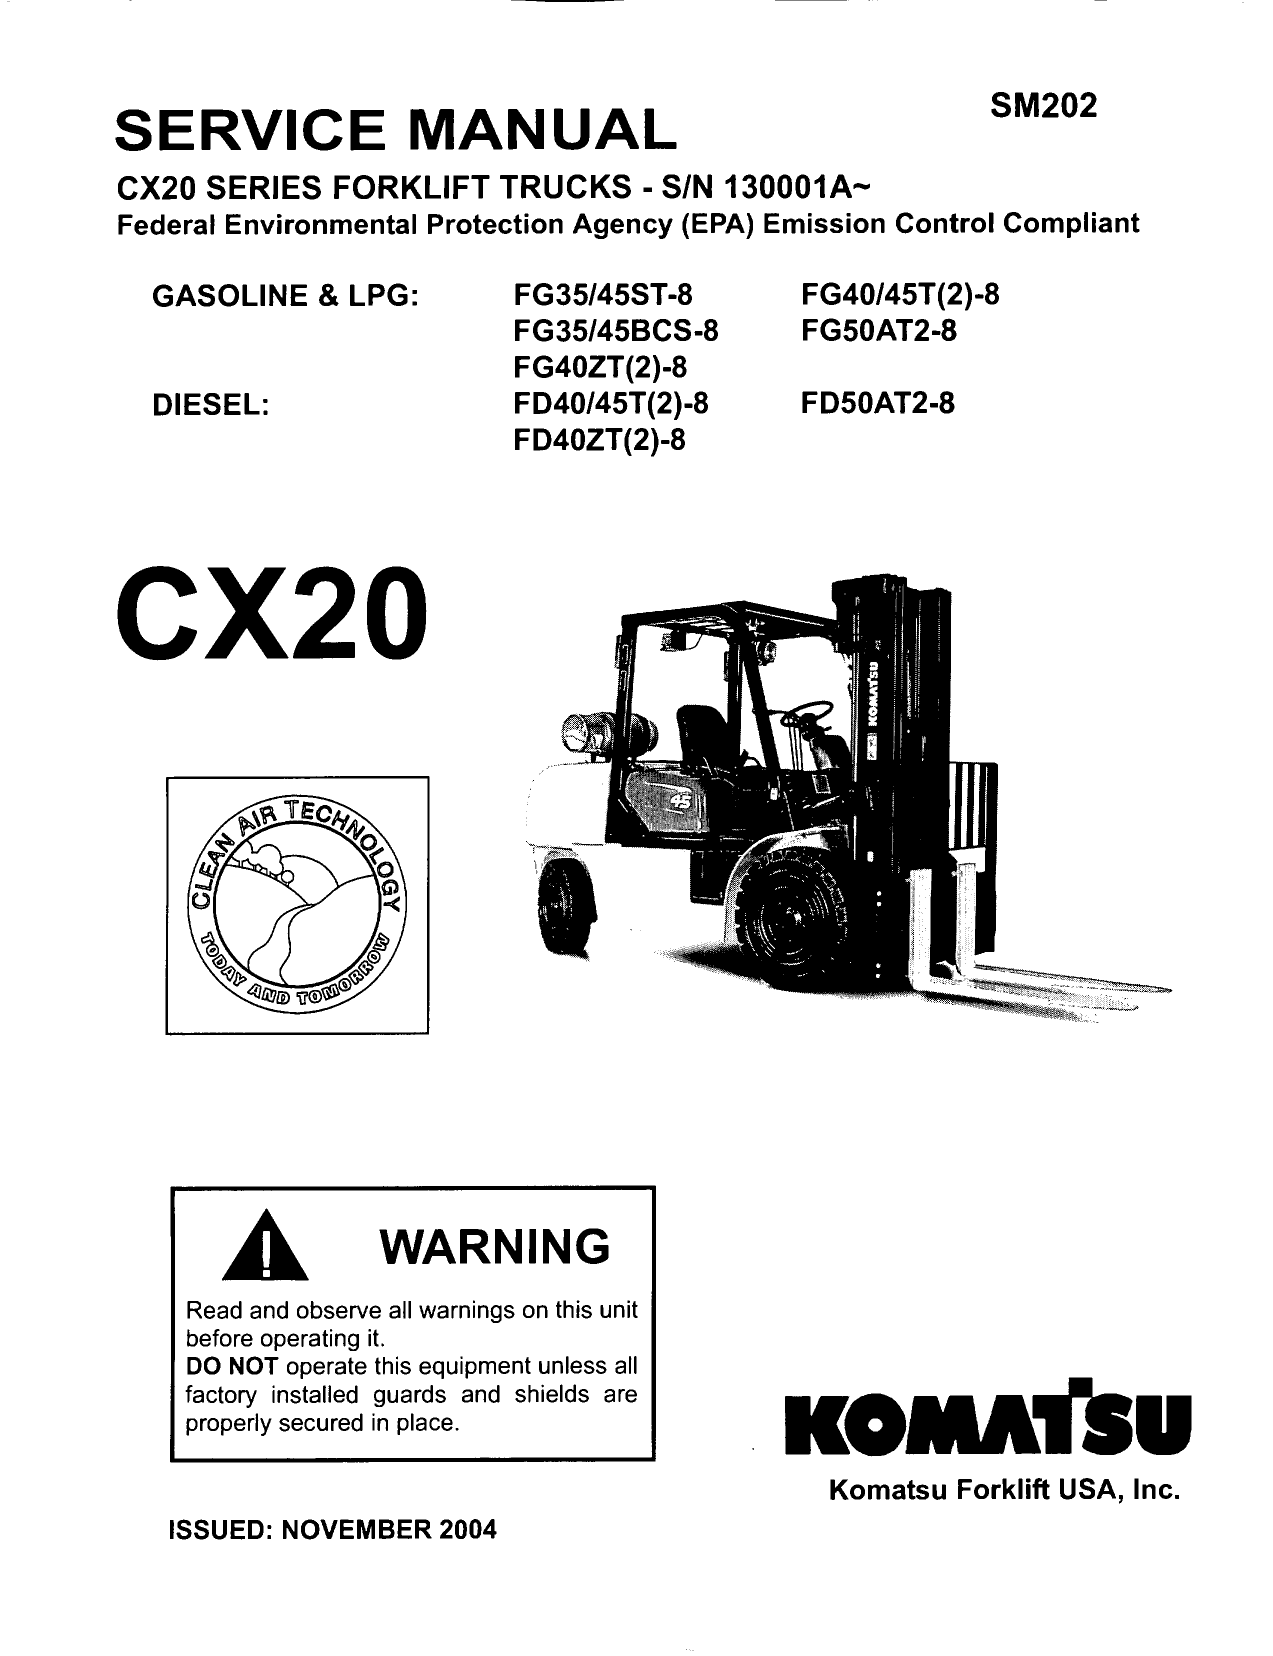 Komatsu compact wheel loader